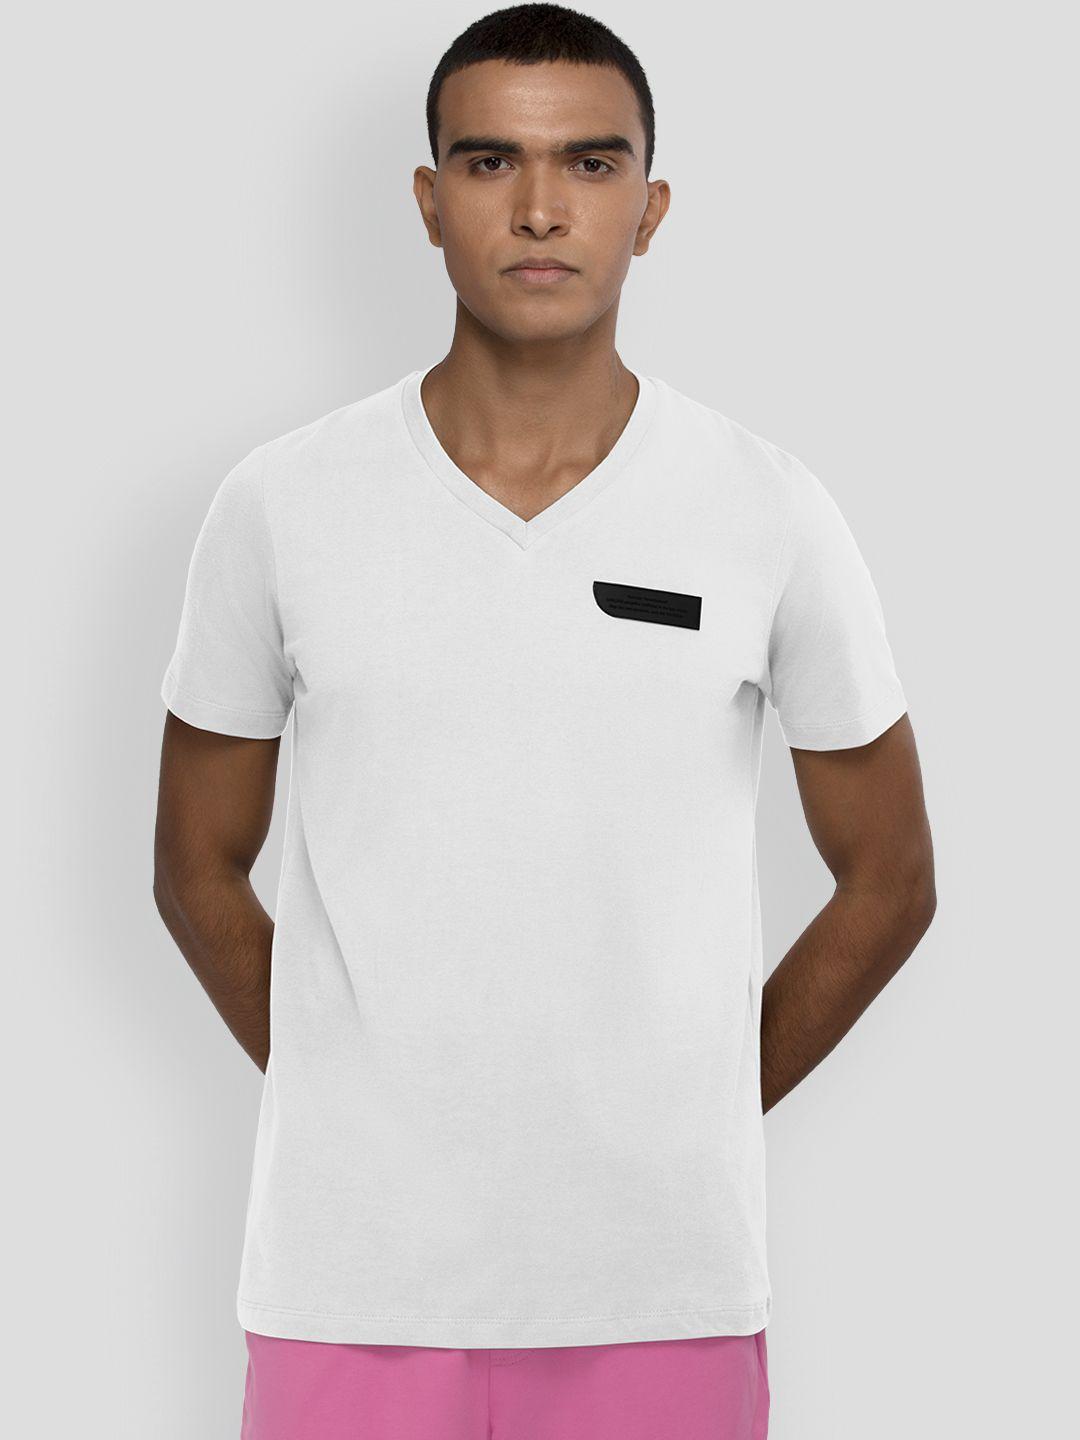 pangolin v-neck cotton casual t-shirt